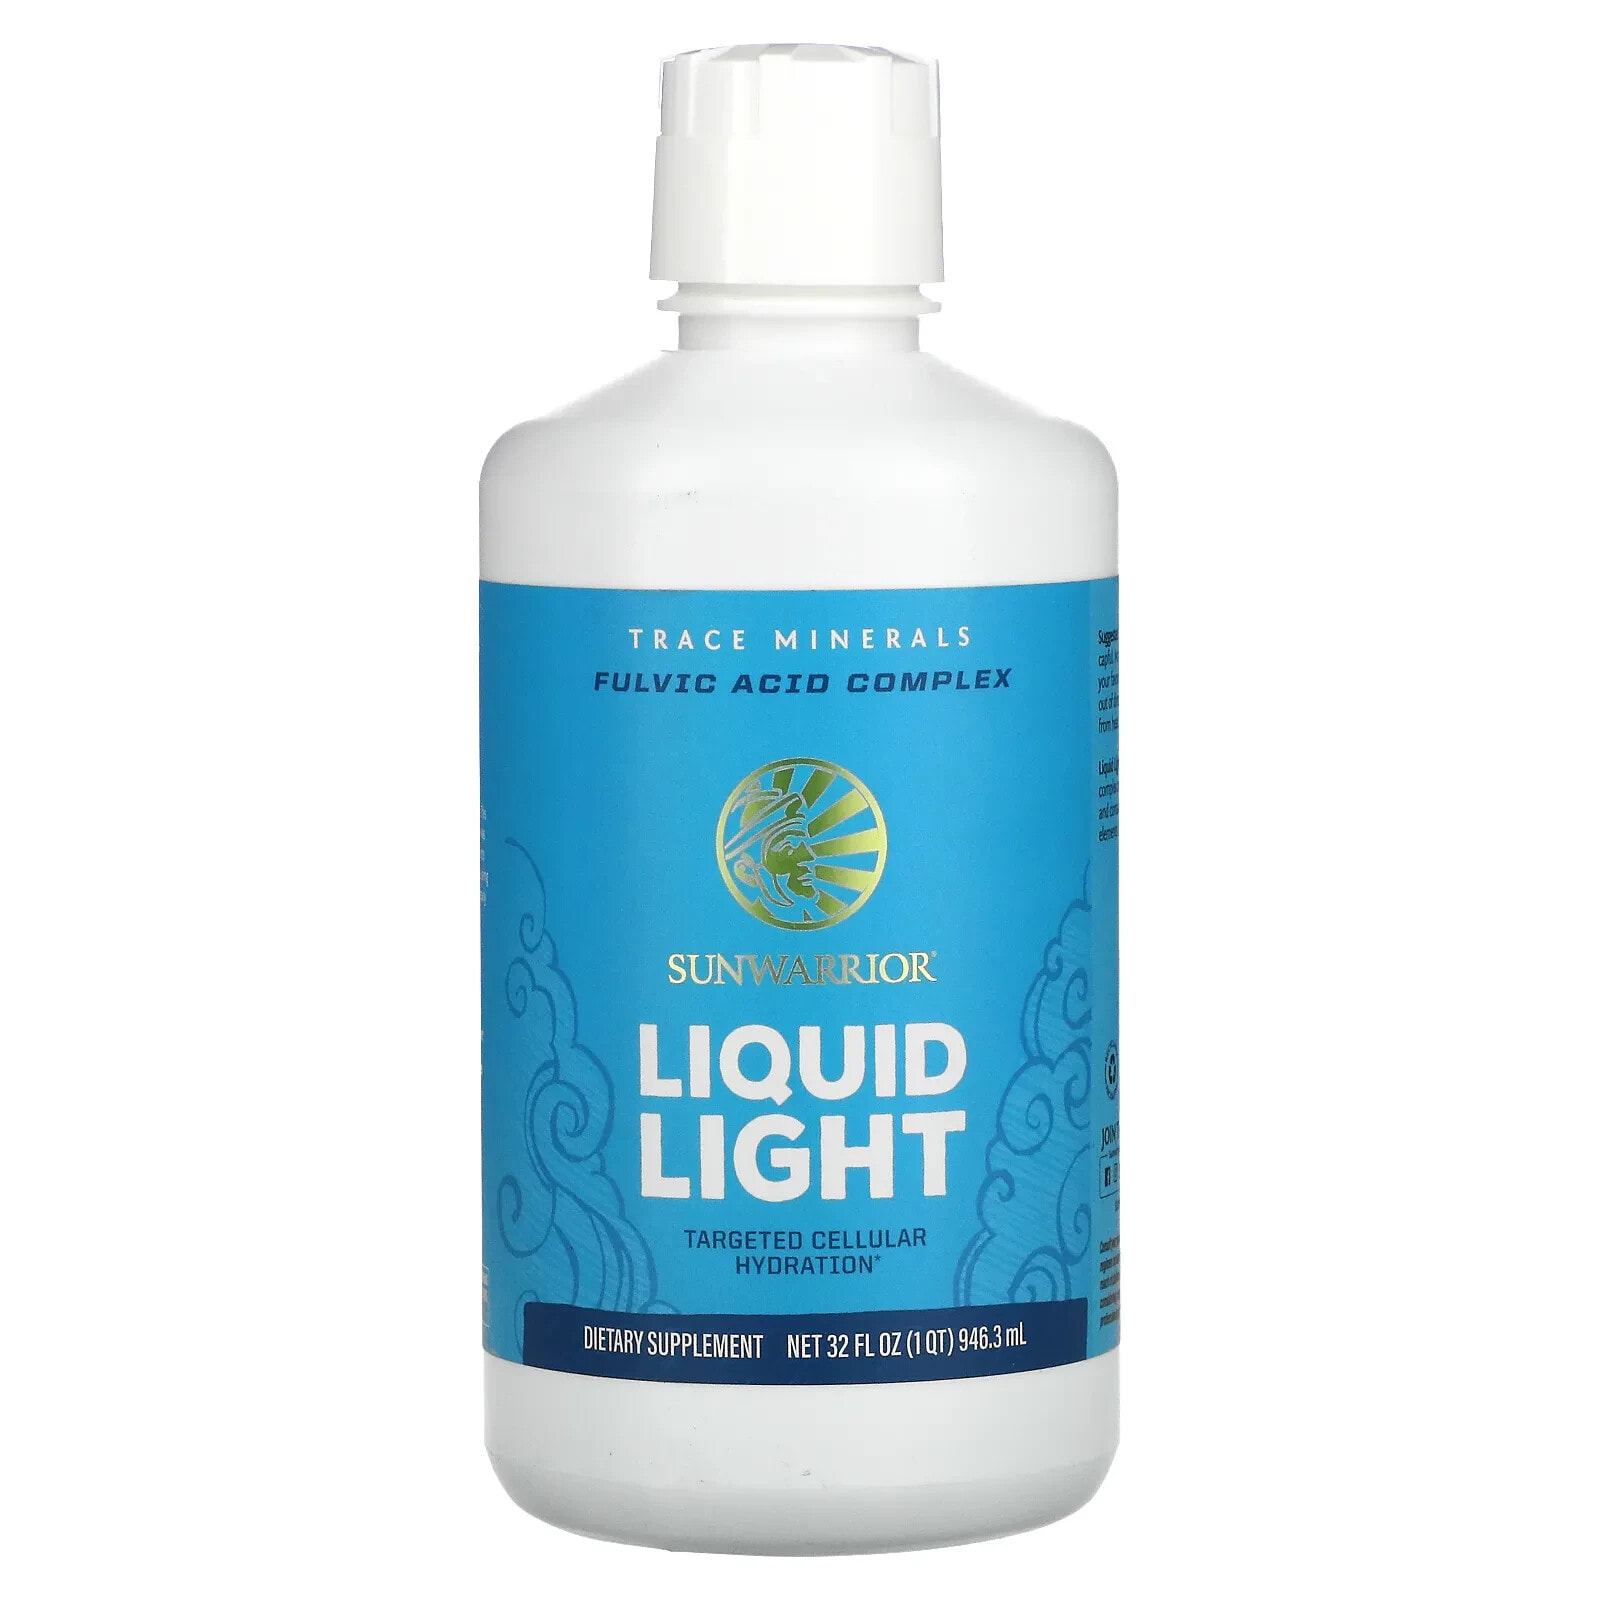 Sunwarrior, Liquid Light, Fulvic Acid Complex, 32 fl oz (946.3 ml)